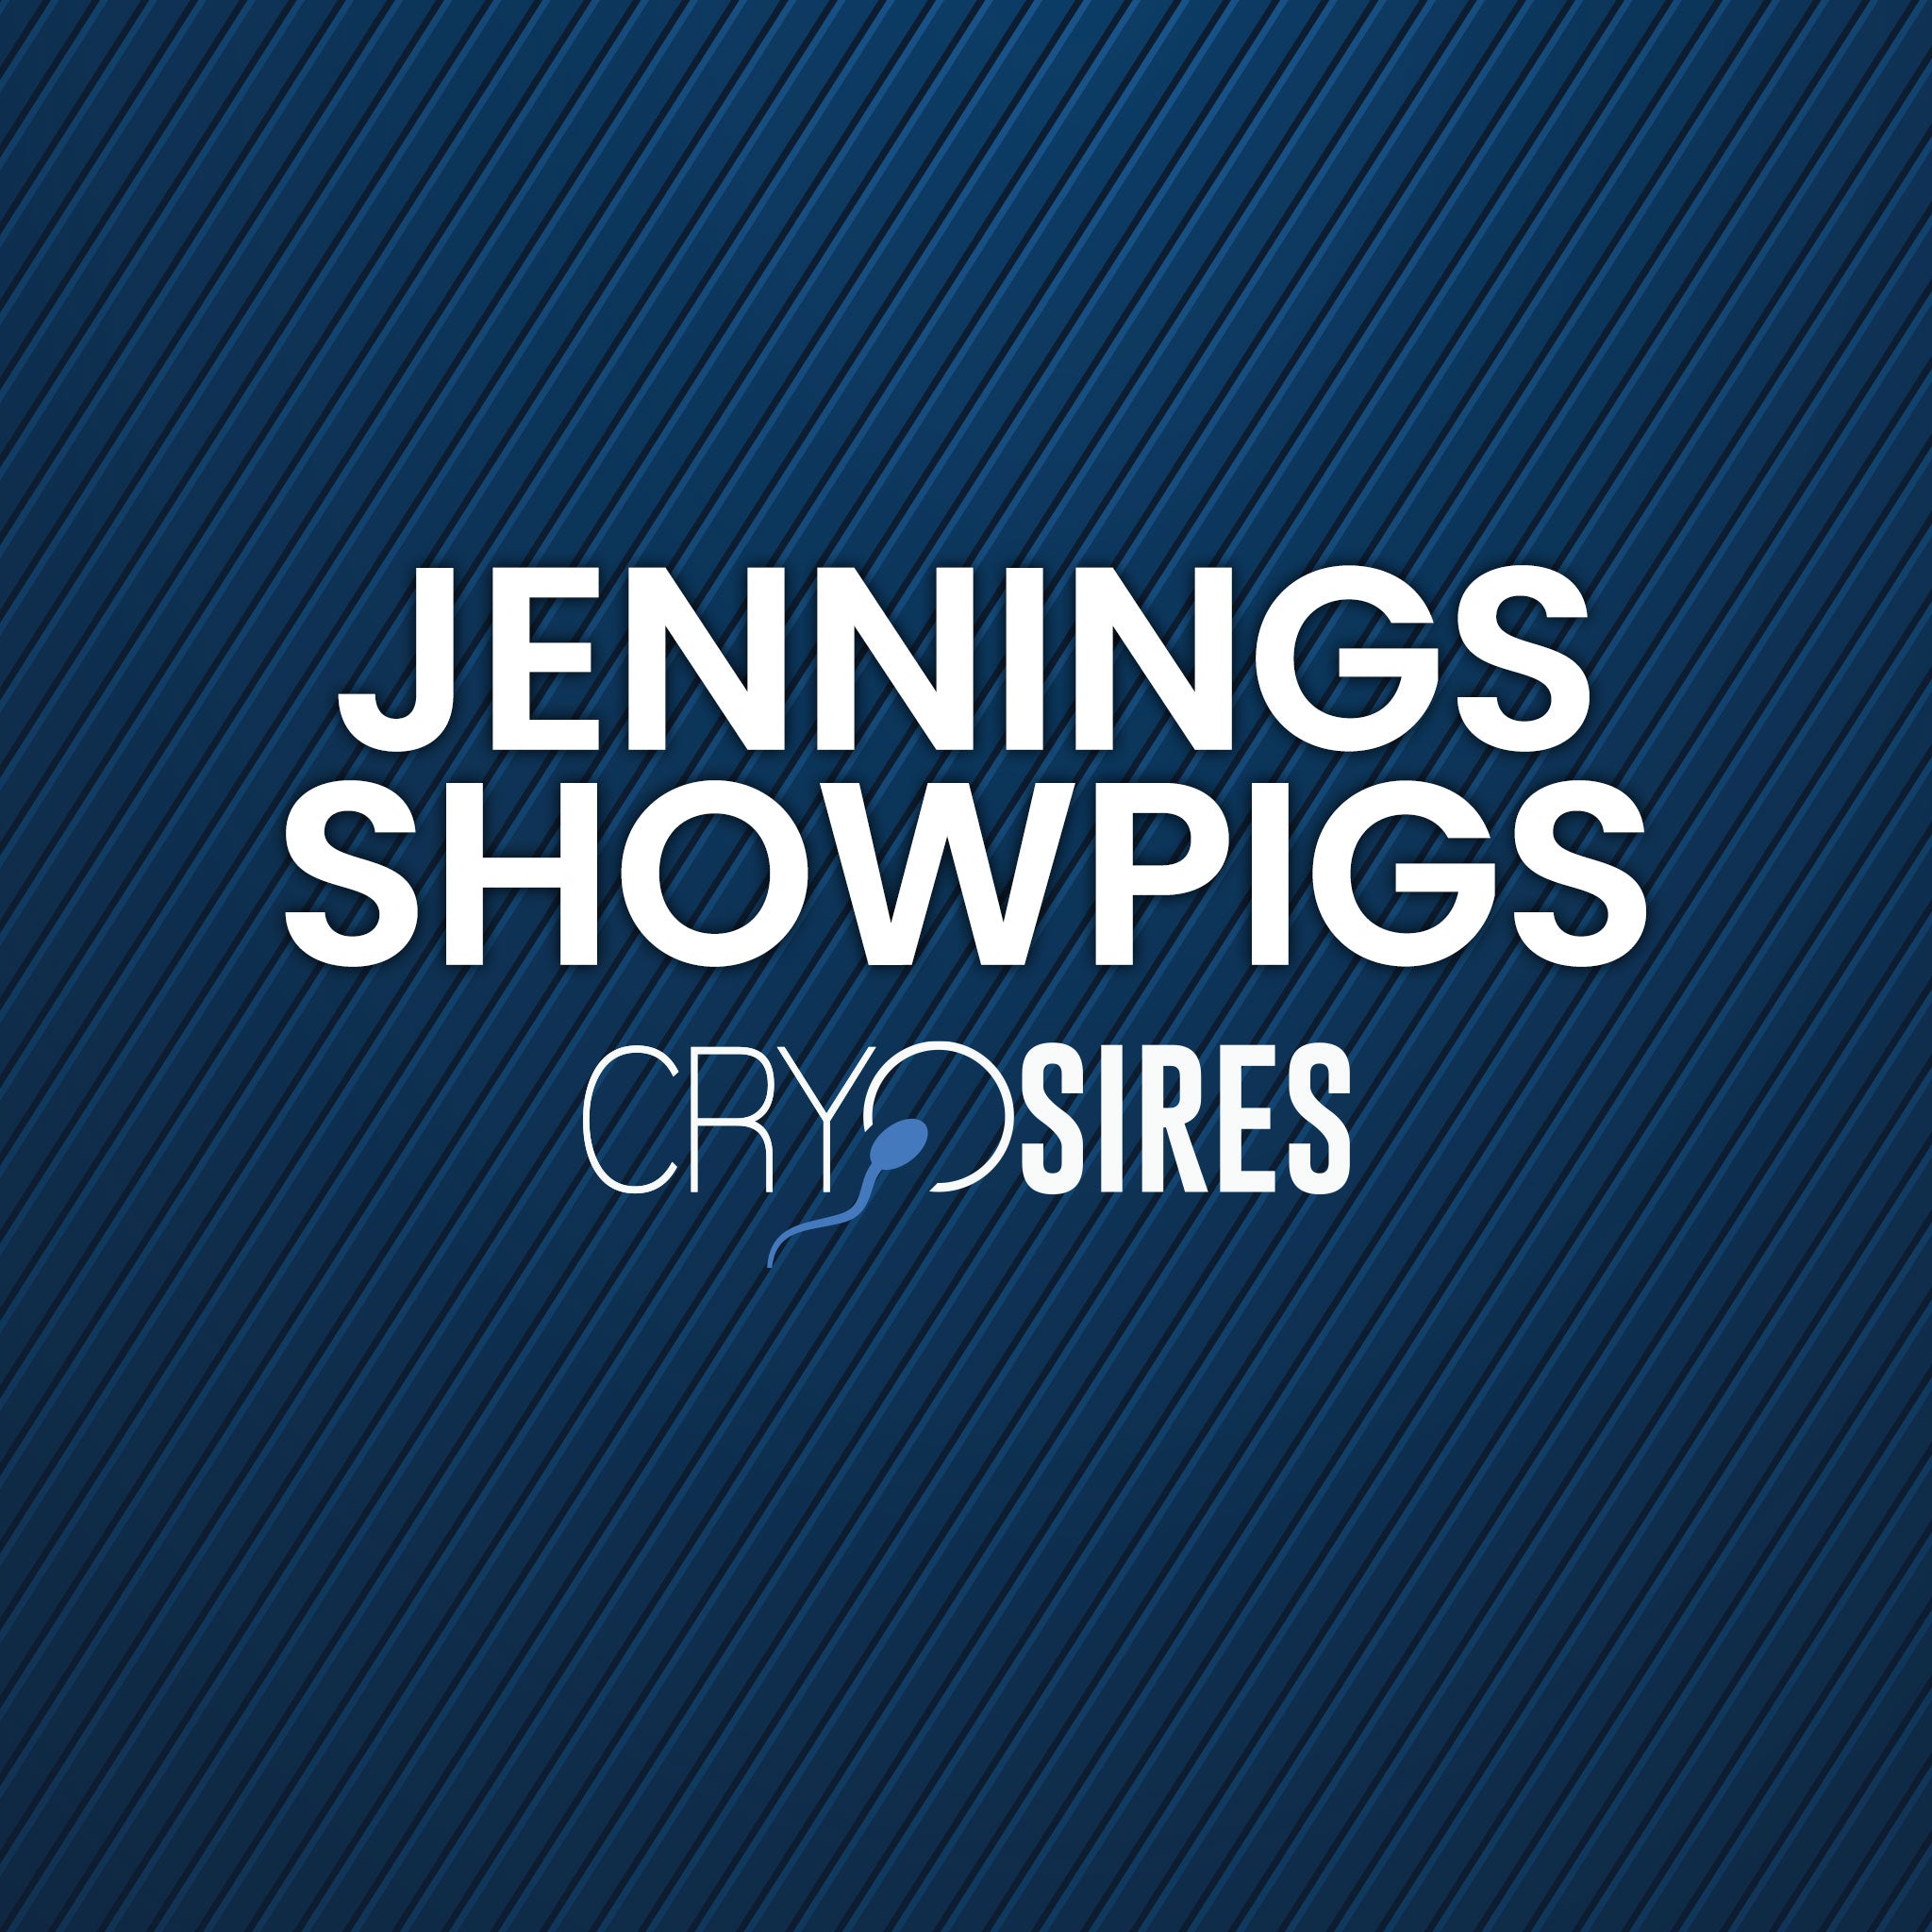 Jennings Showpigs